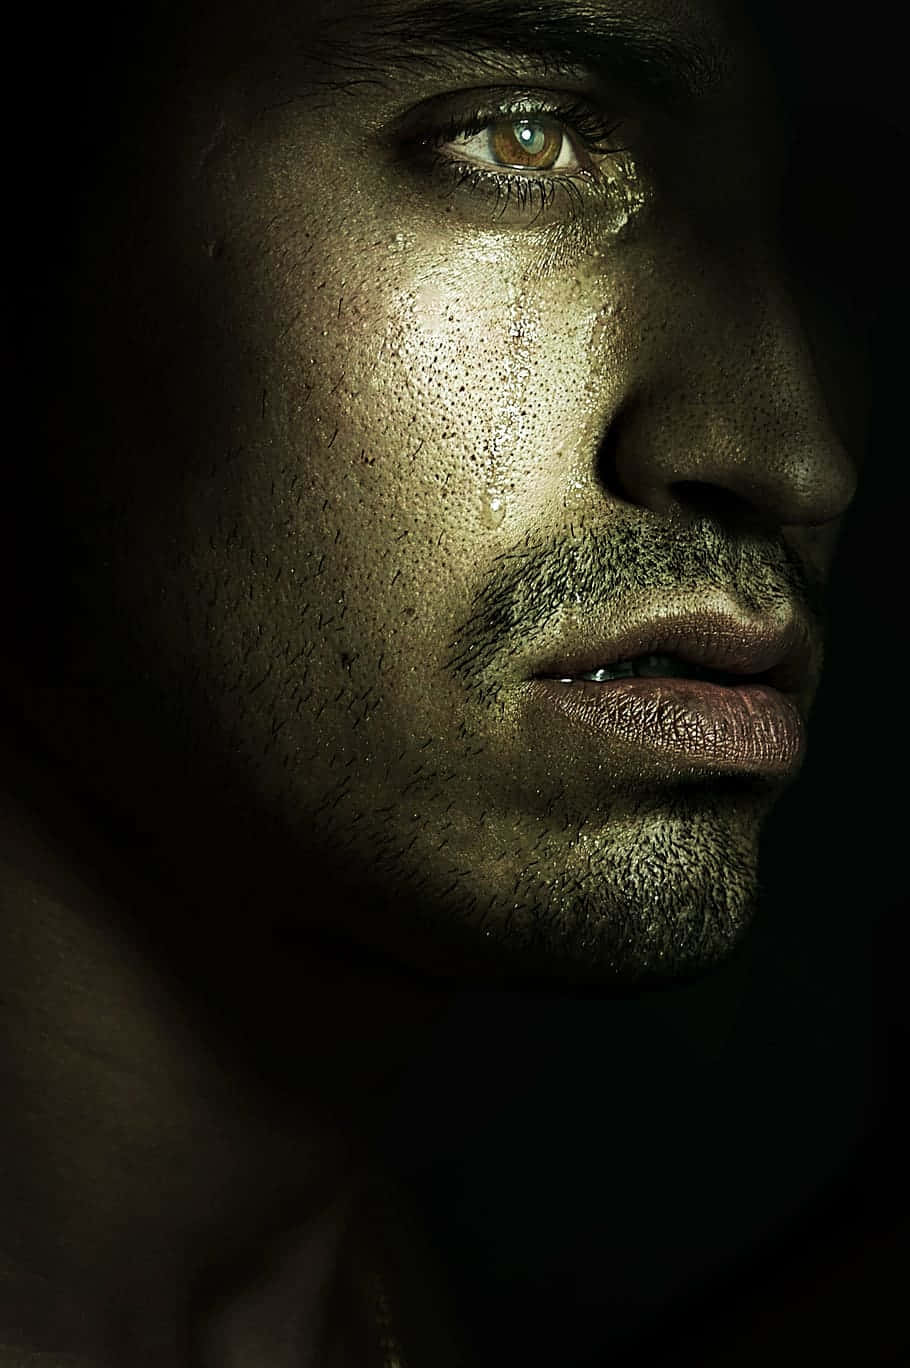 Man In Tear Of Sadness Wallpaper